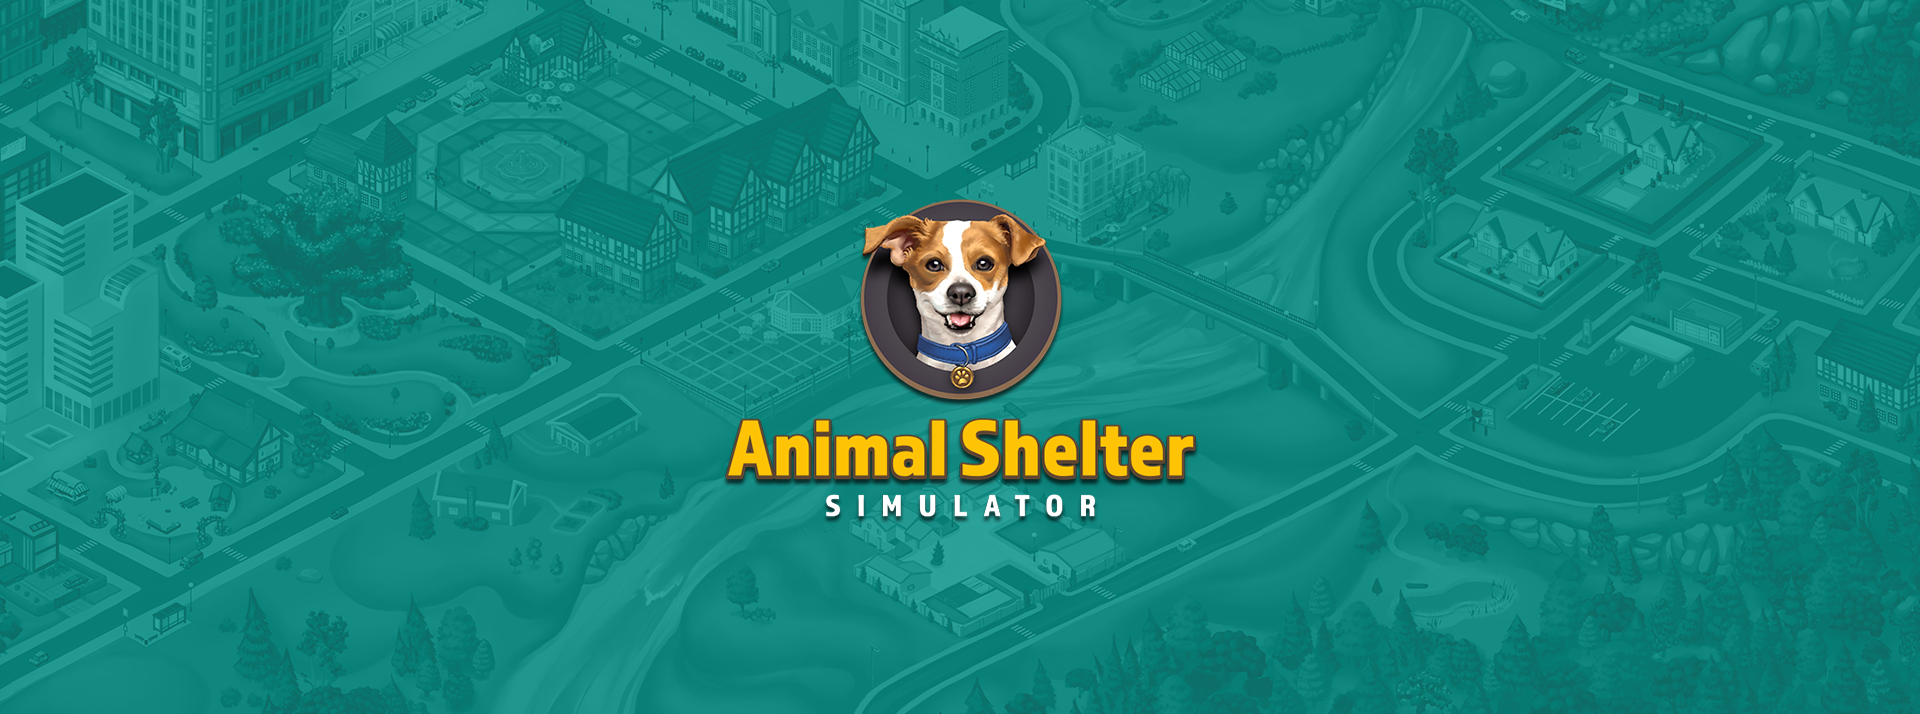 Digital Melody Games - Animal Shelter Simulator